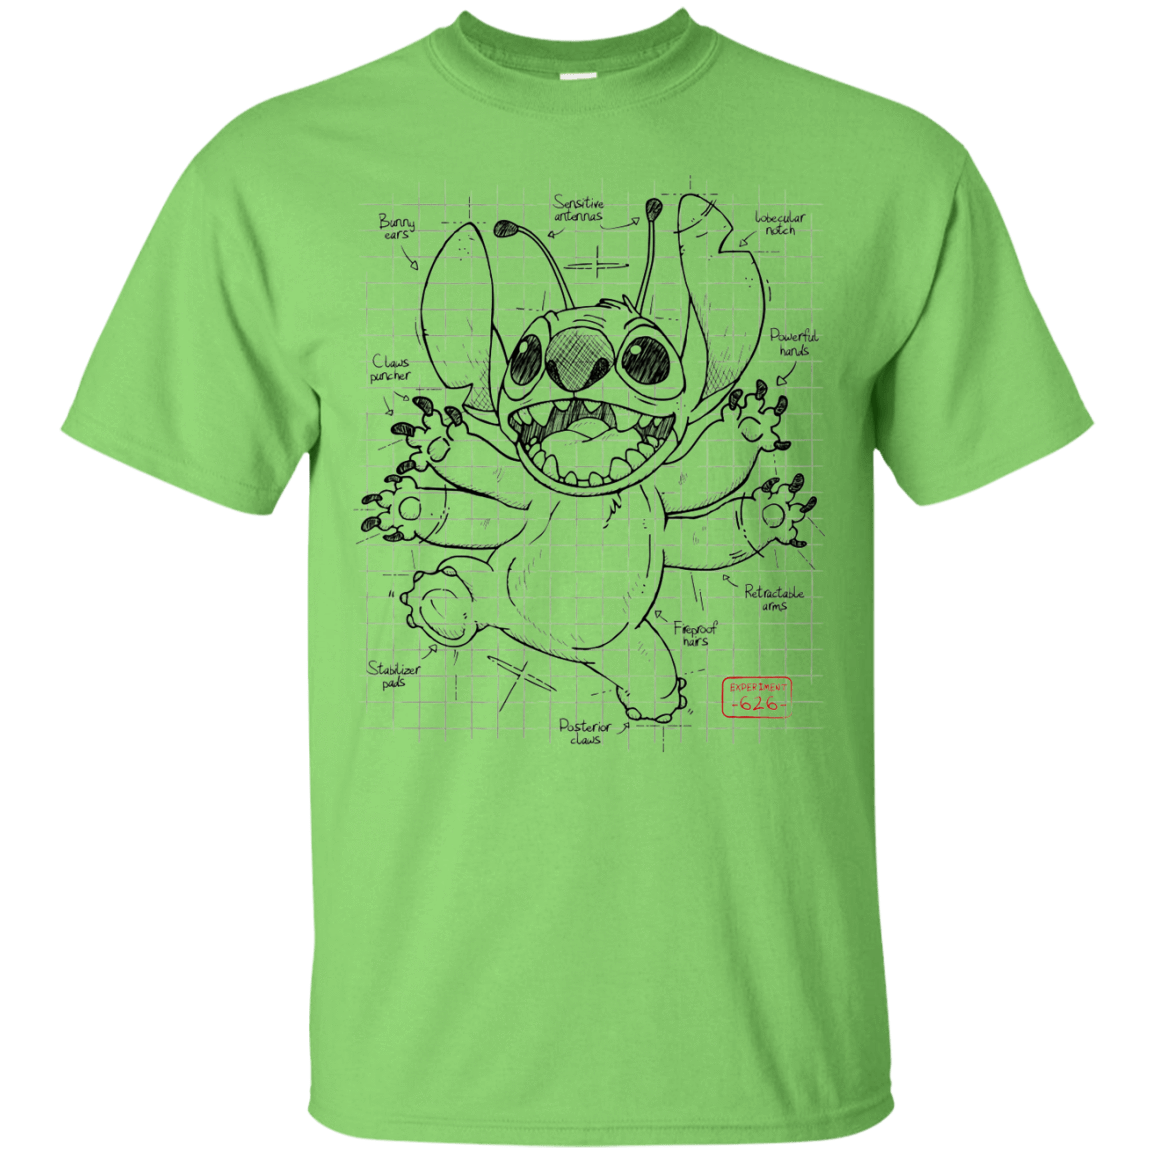 T-Shirts Lime / S Stitch Plan T-Shirt